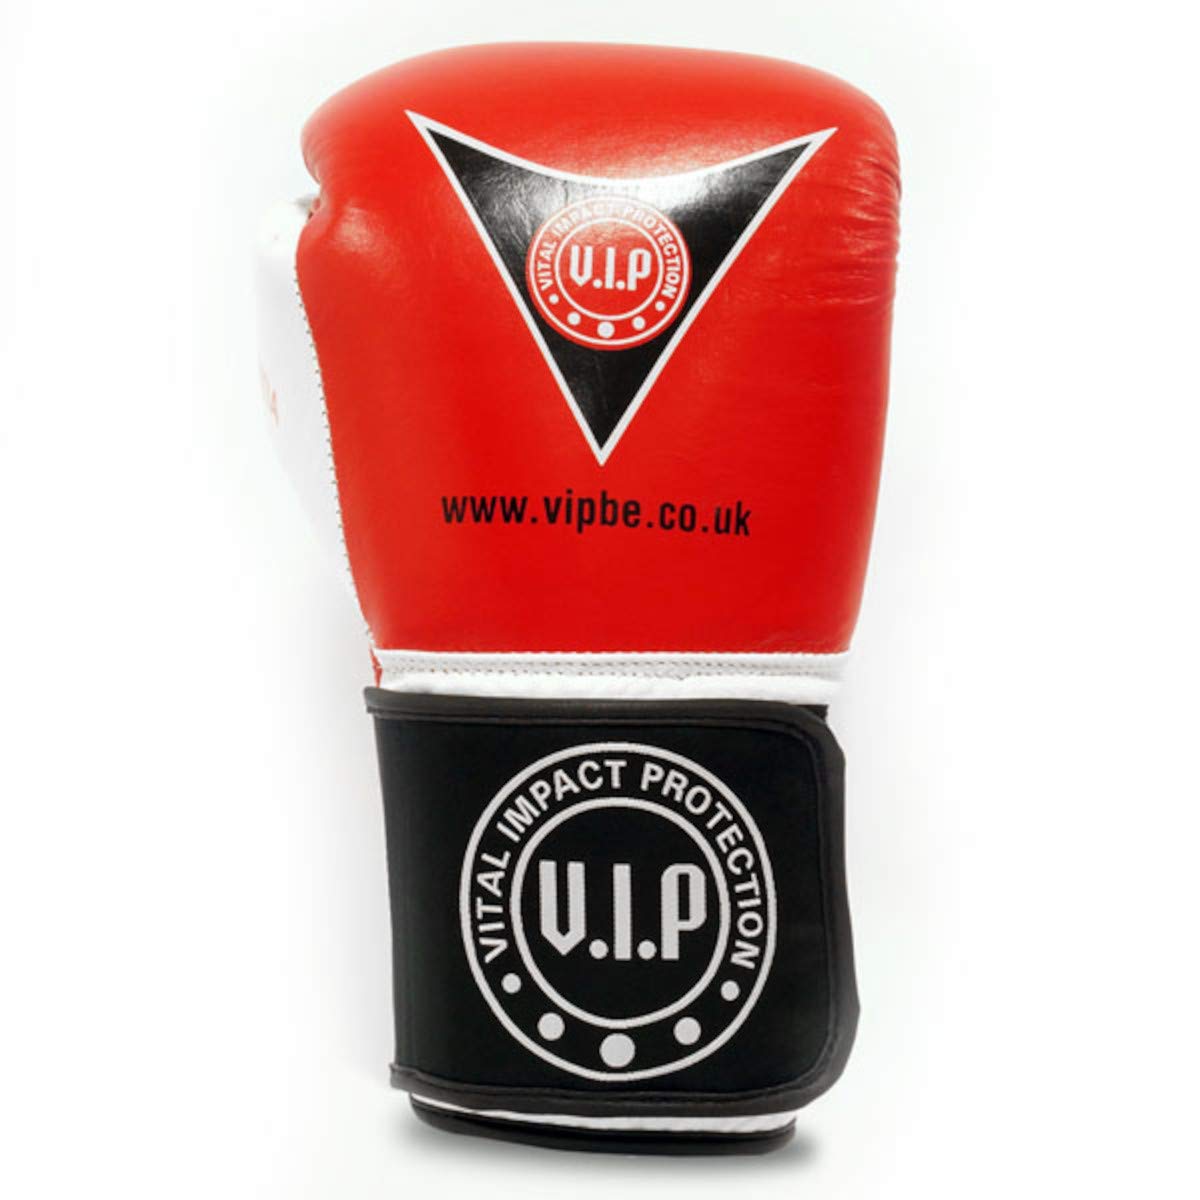 VIP Vital Impact Protection Potentia Leder-Boxhandschuhe, MMA, Kampfsport, Fitness, Zwischenhandschuh, Sparring, Handschuhe, rot/weiß, 400 g